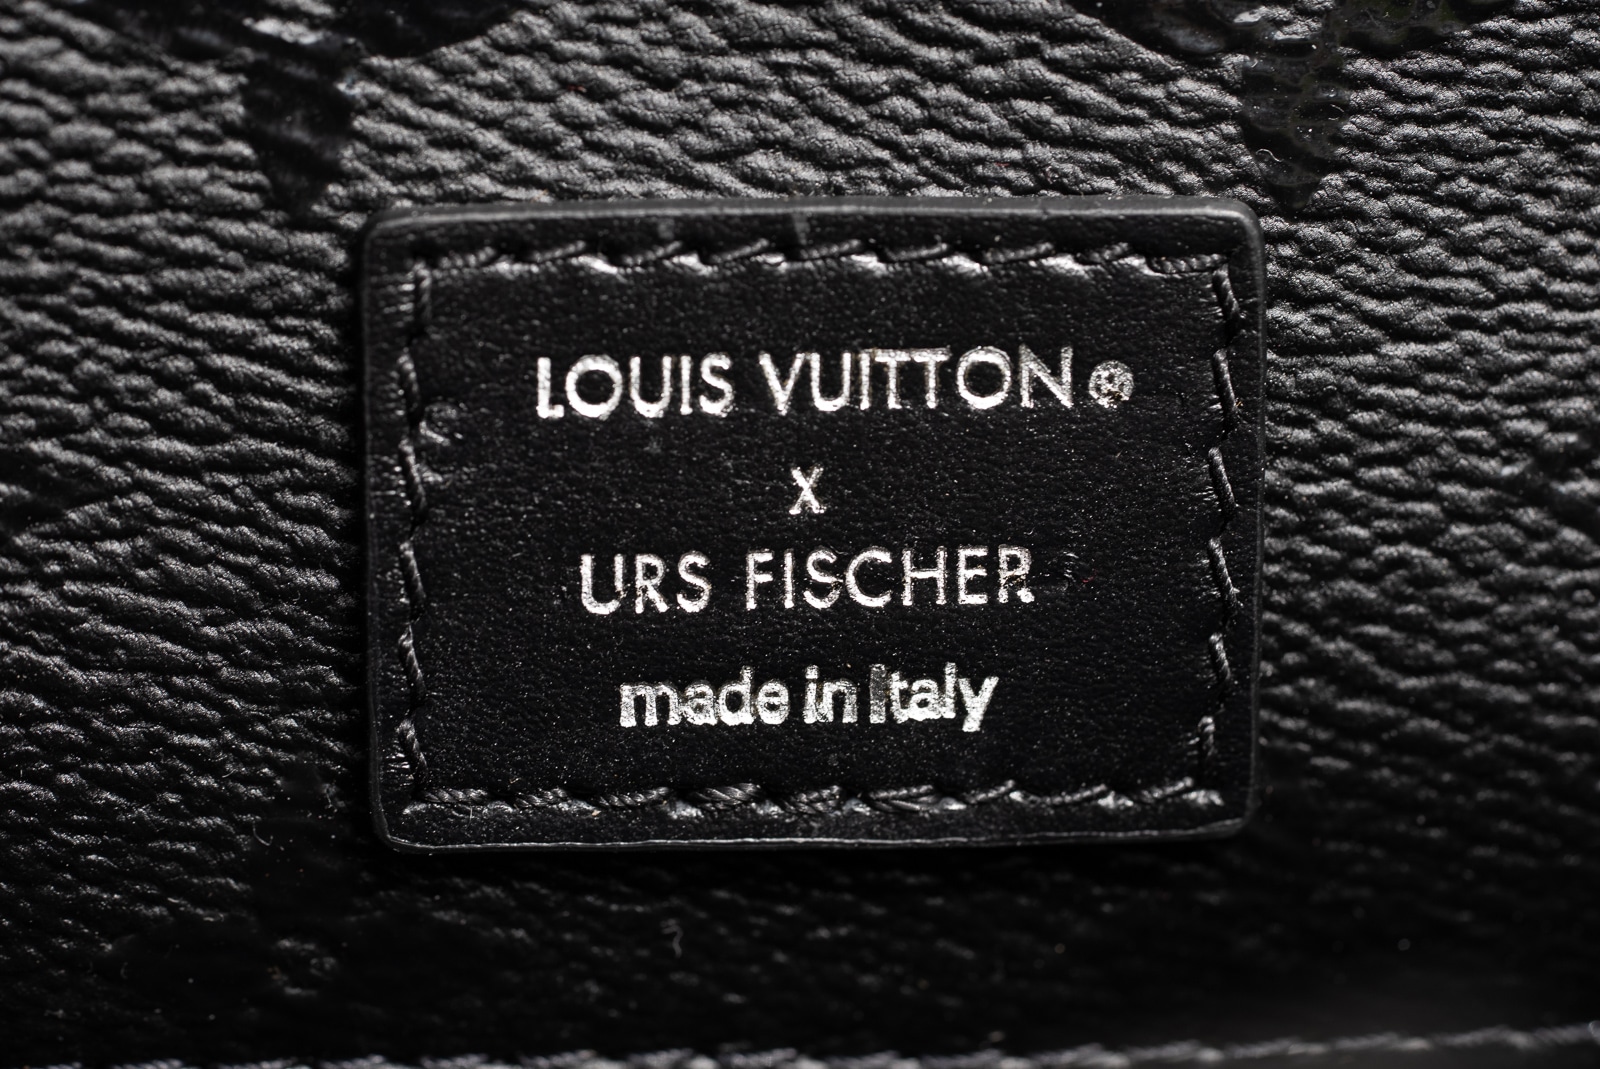 Urs Fischer Gives the Louis Vuitton Monogram an Unexpected Twist